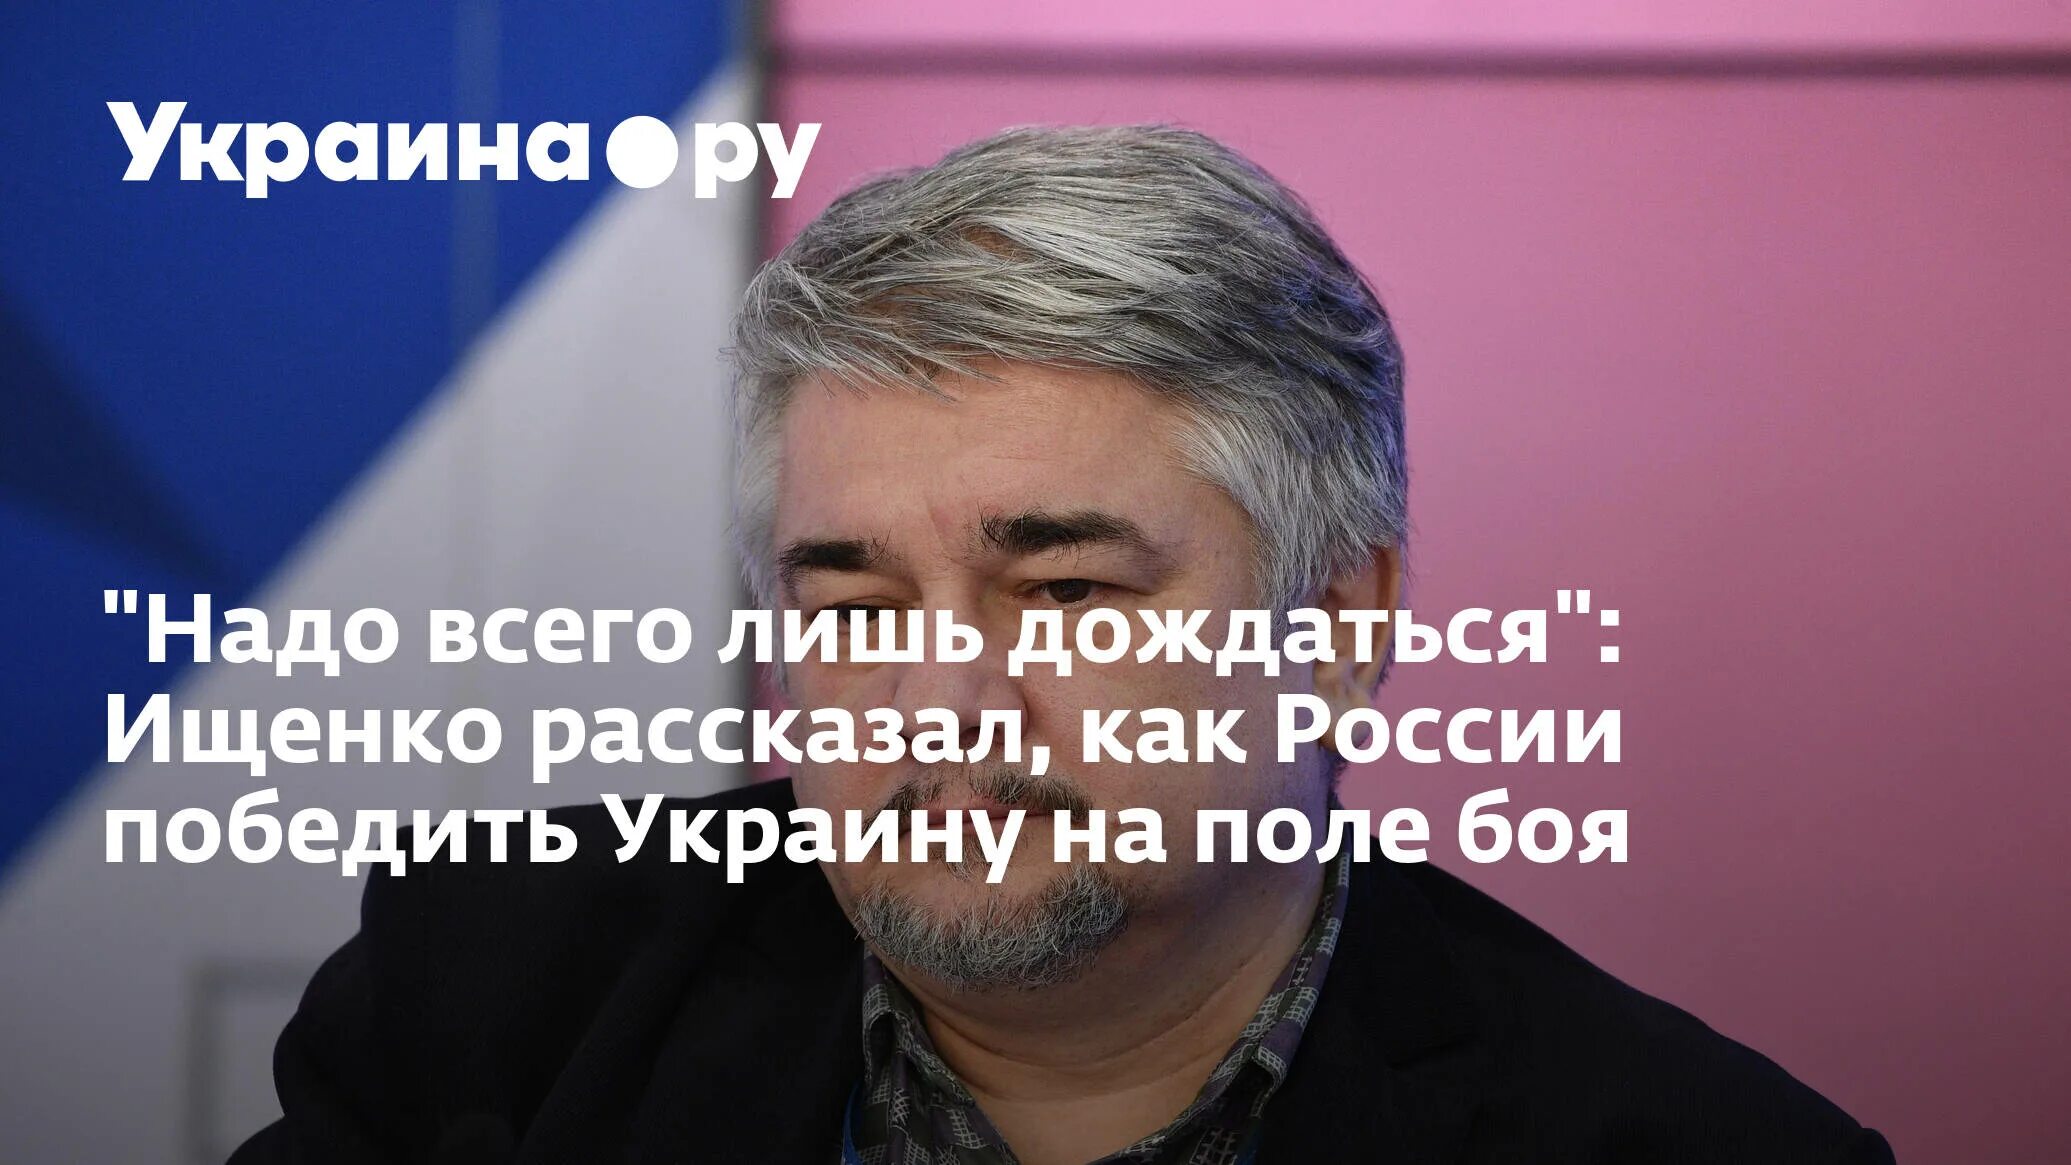 Ищенко последнее дискред. Политолог Ищенко последнее. Украина ру Ищенко.